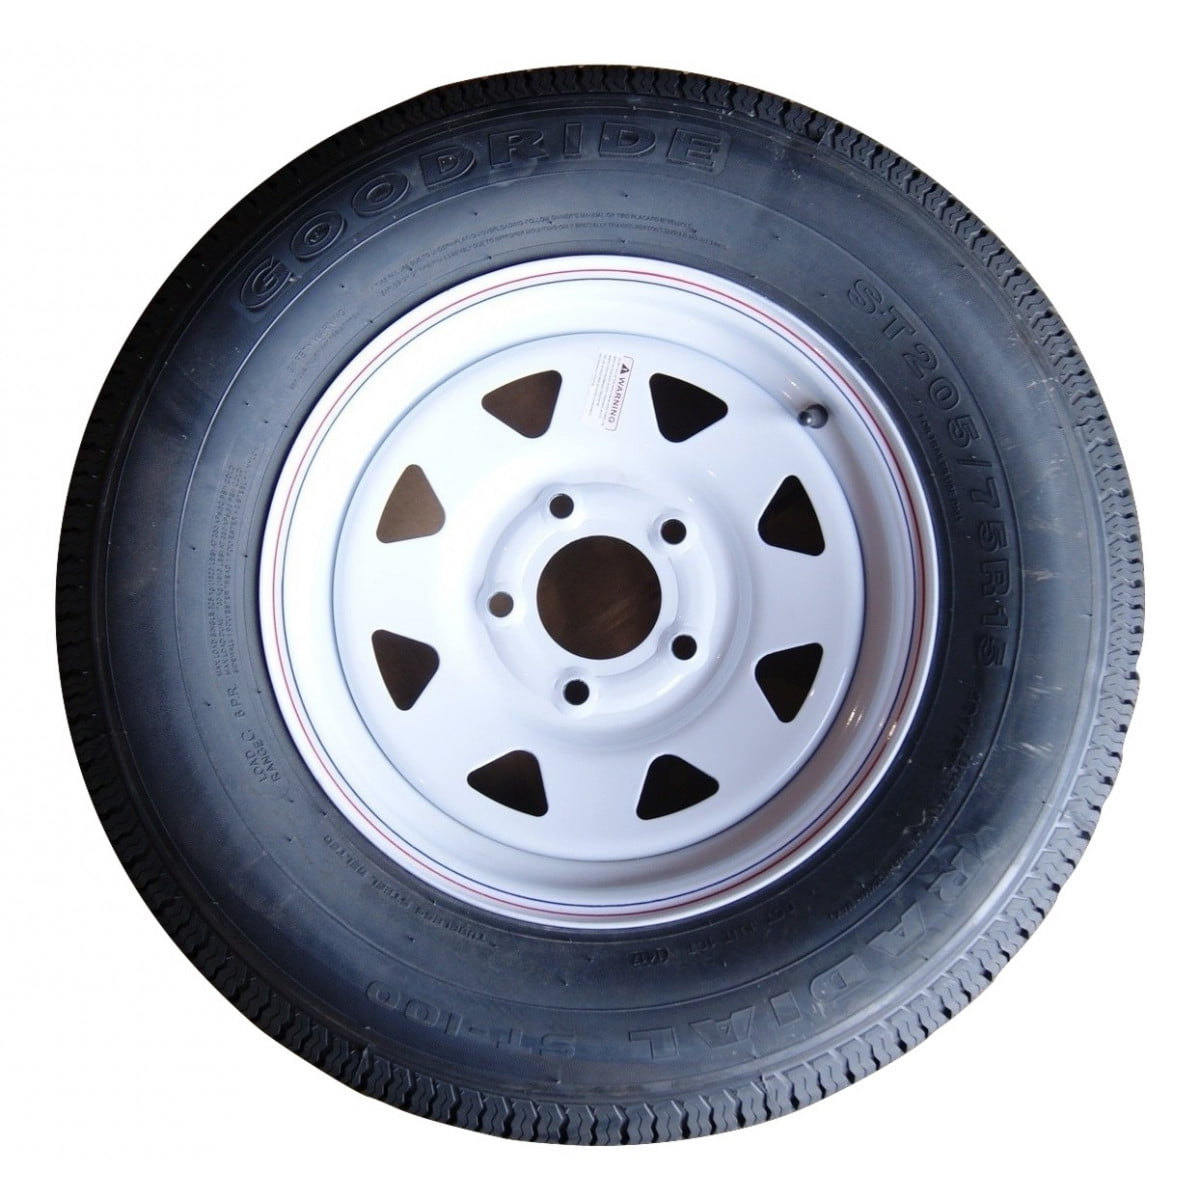 TW Goodride ST205/7515 6 Ply Bias Trailer Tire LRC 